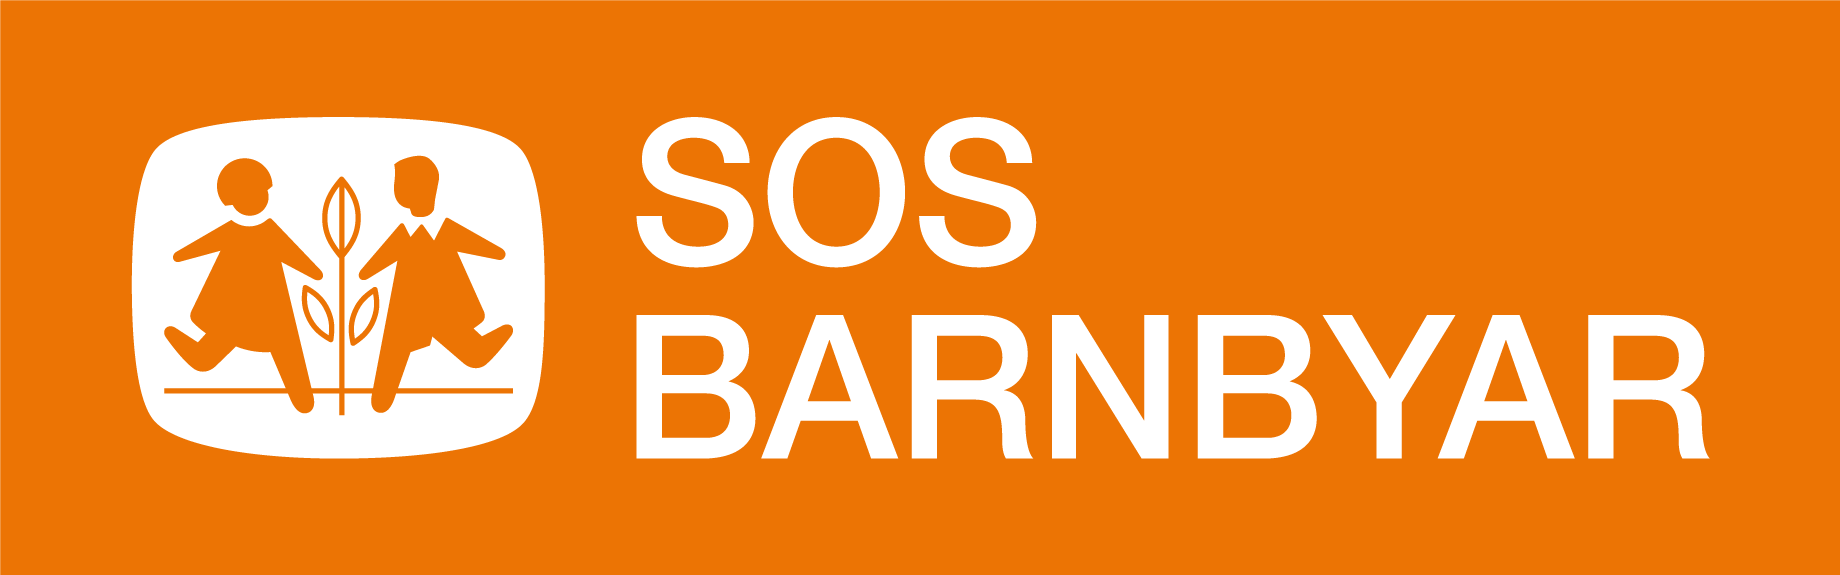 SOS Barnbyar Logo Orange